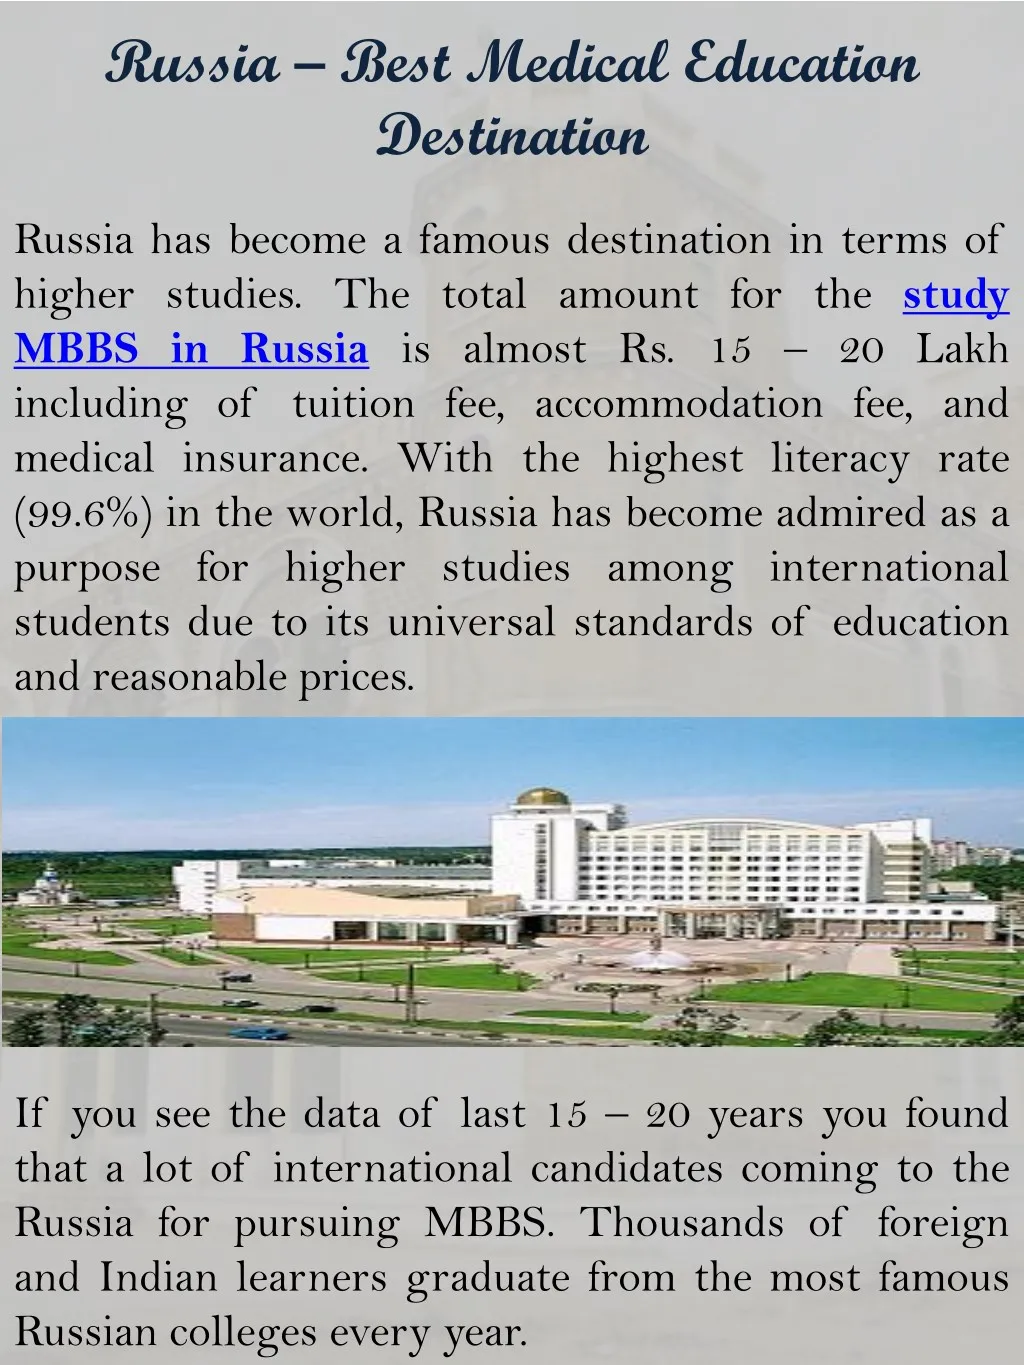 russia best medical education destination